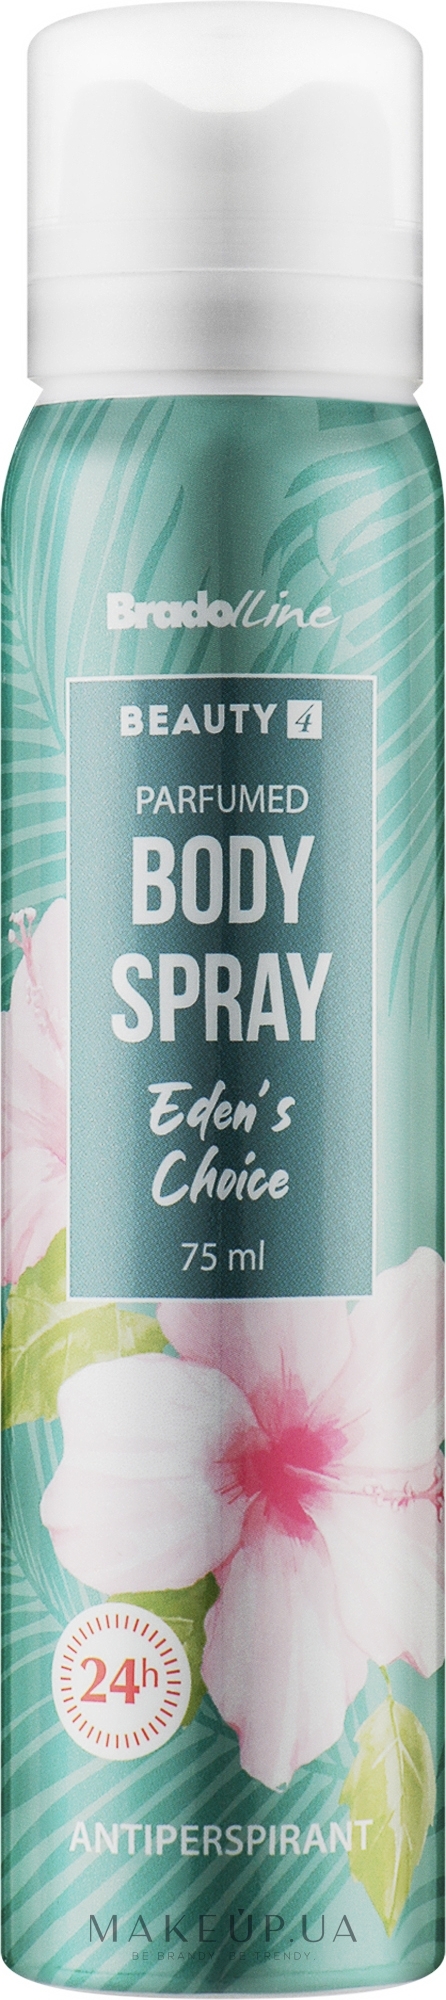 Антиперспірант-спрей для тіла "Edens Choice" - Bradoline Beauty 4 Body Spray Antiperspirant — фото 75ml